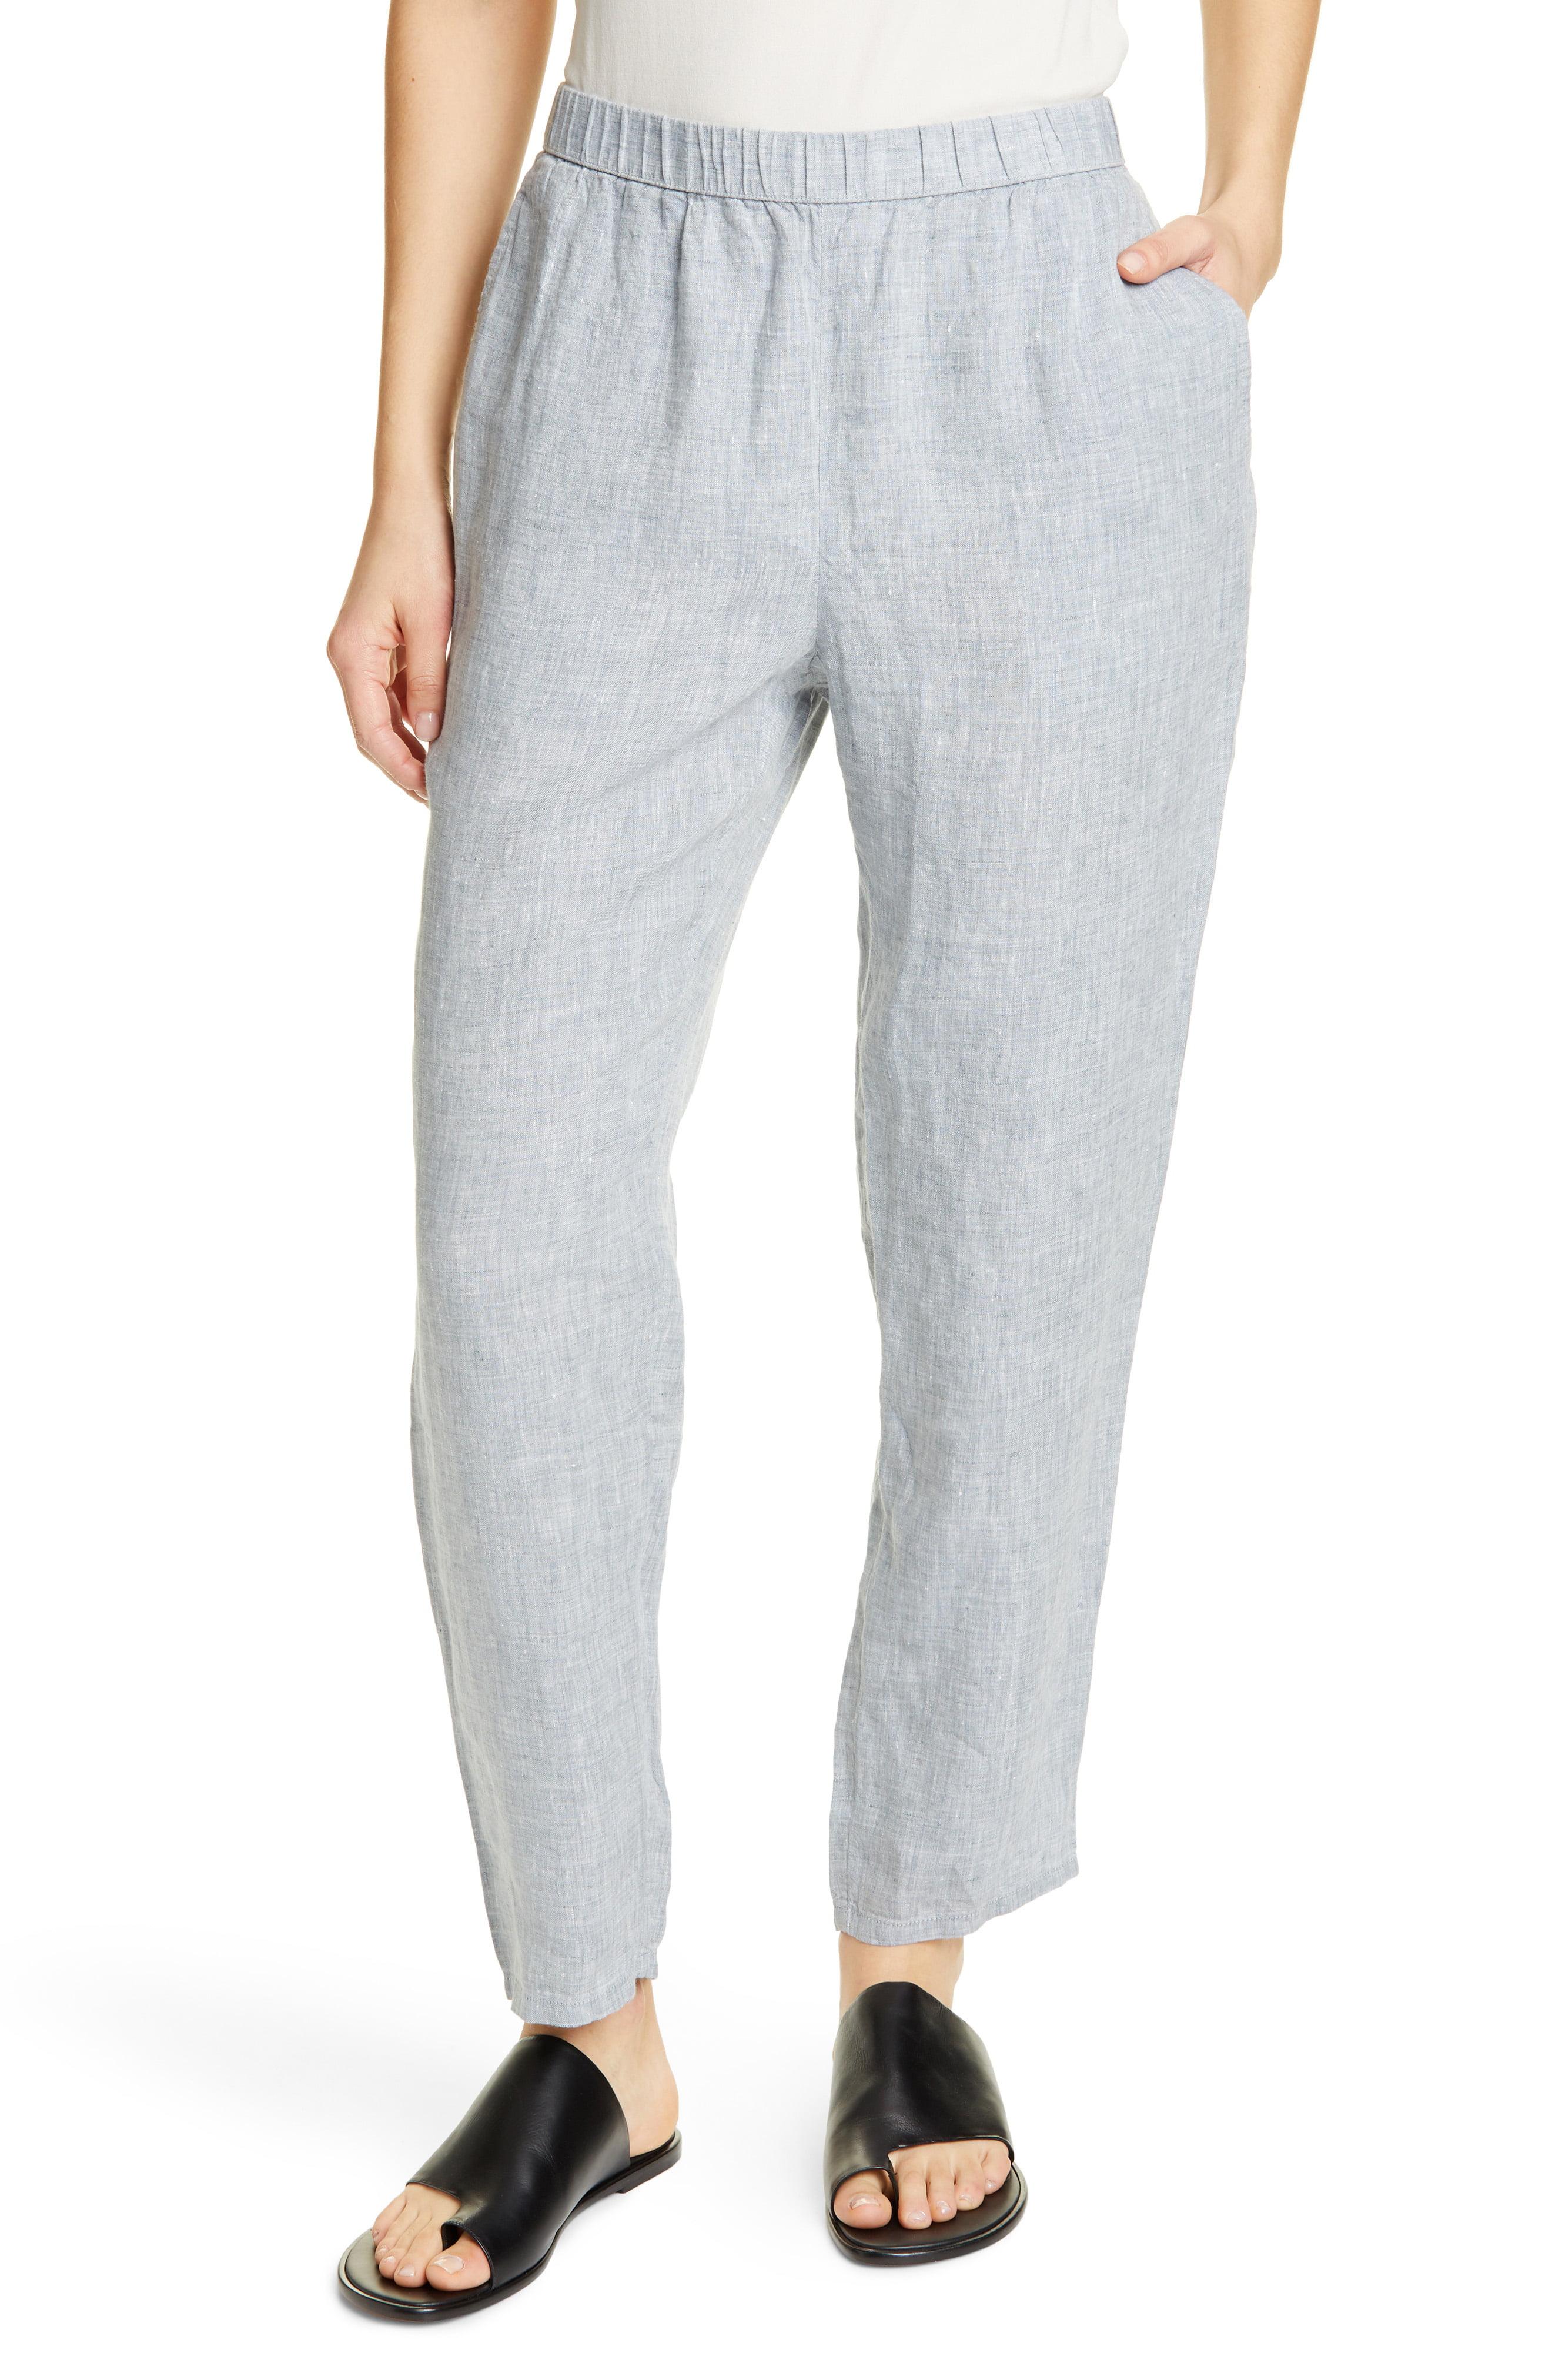 Lyst - Eileen Fisher Organic Linen Ankle Pants in Gray